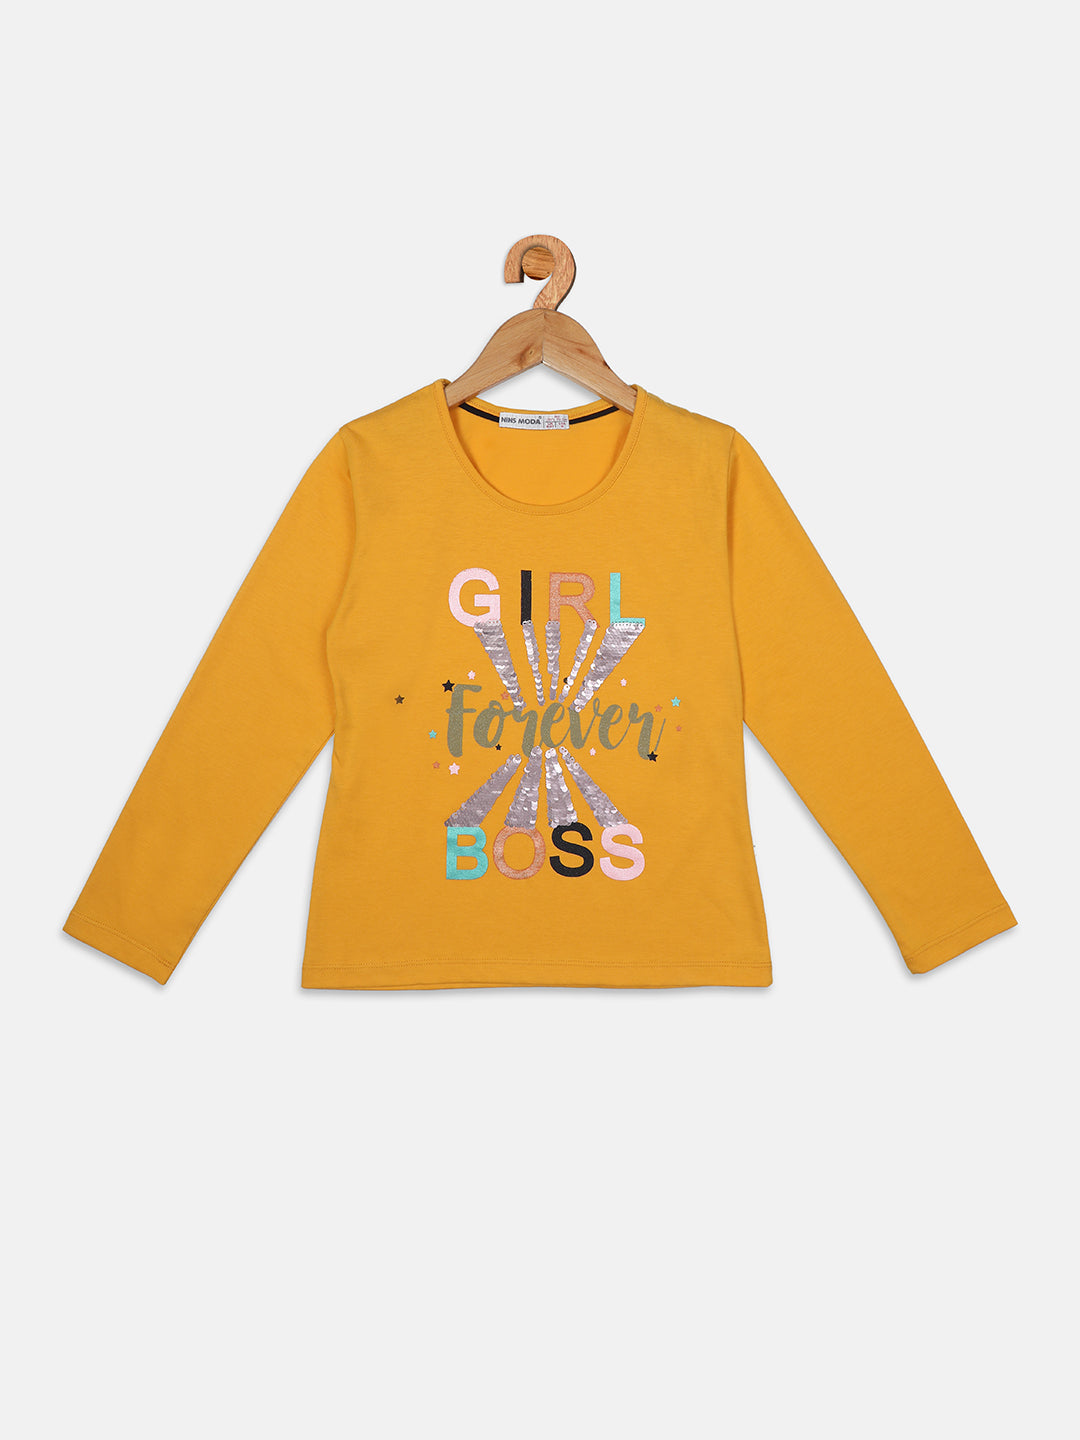 Nins Moda Girls Forever Printed Stylish Top - Mustard